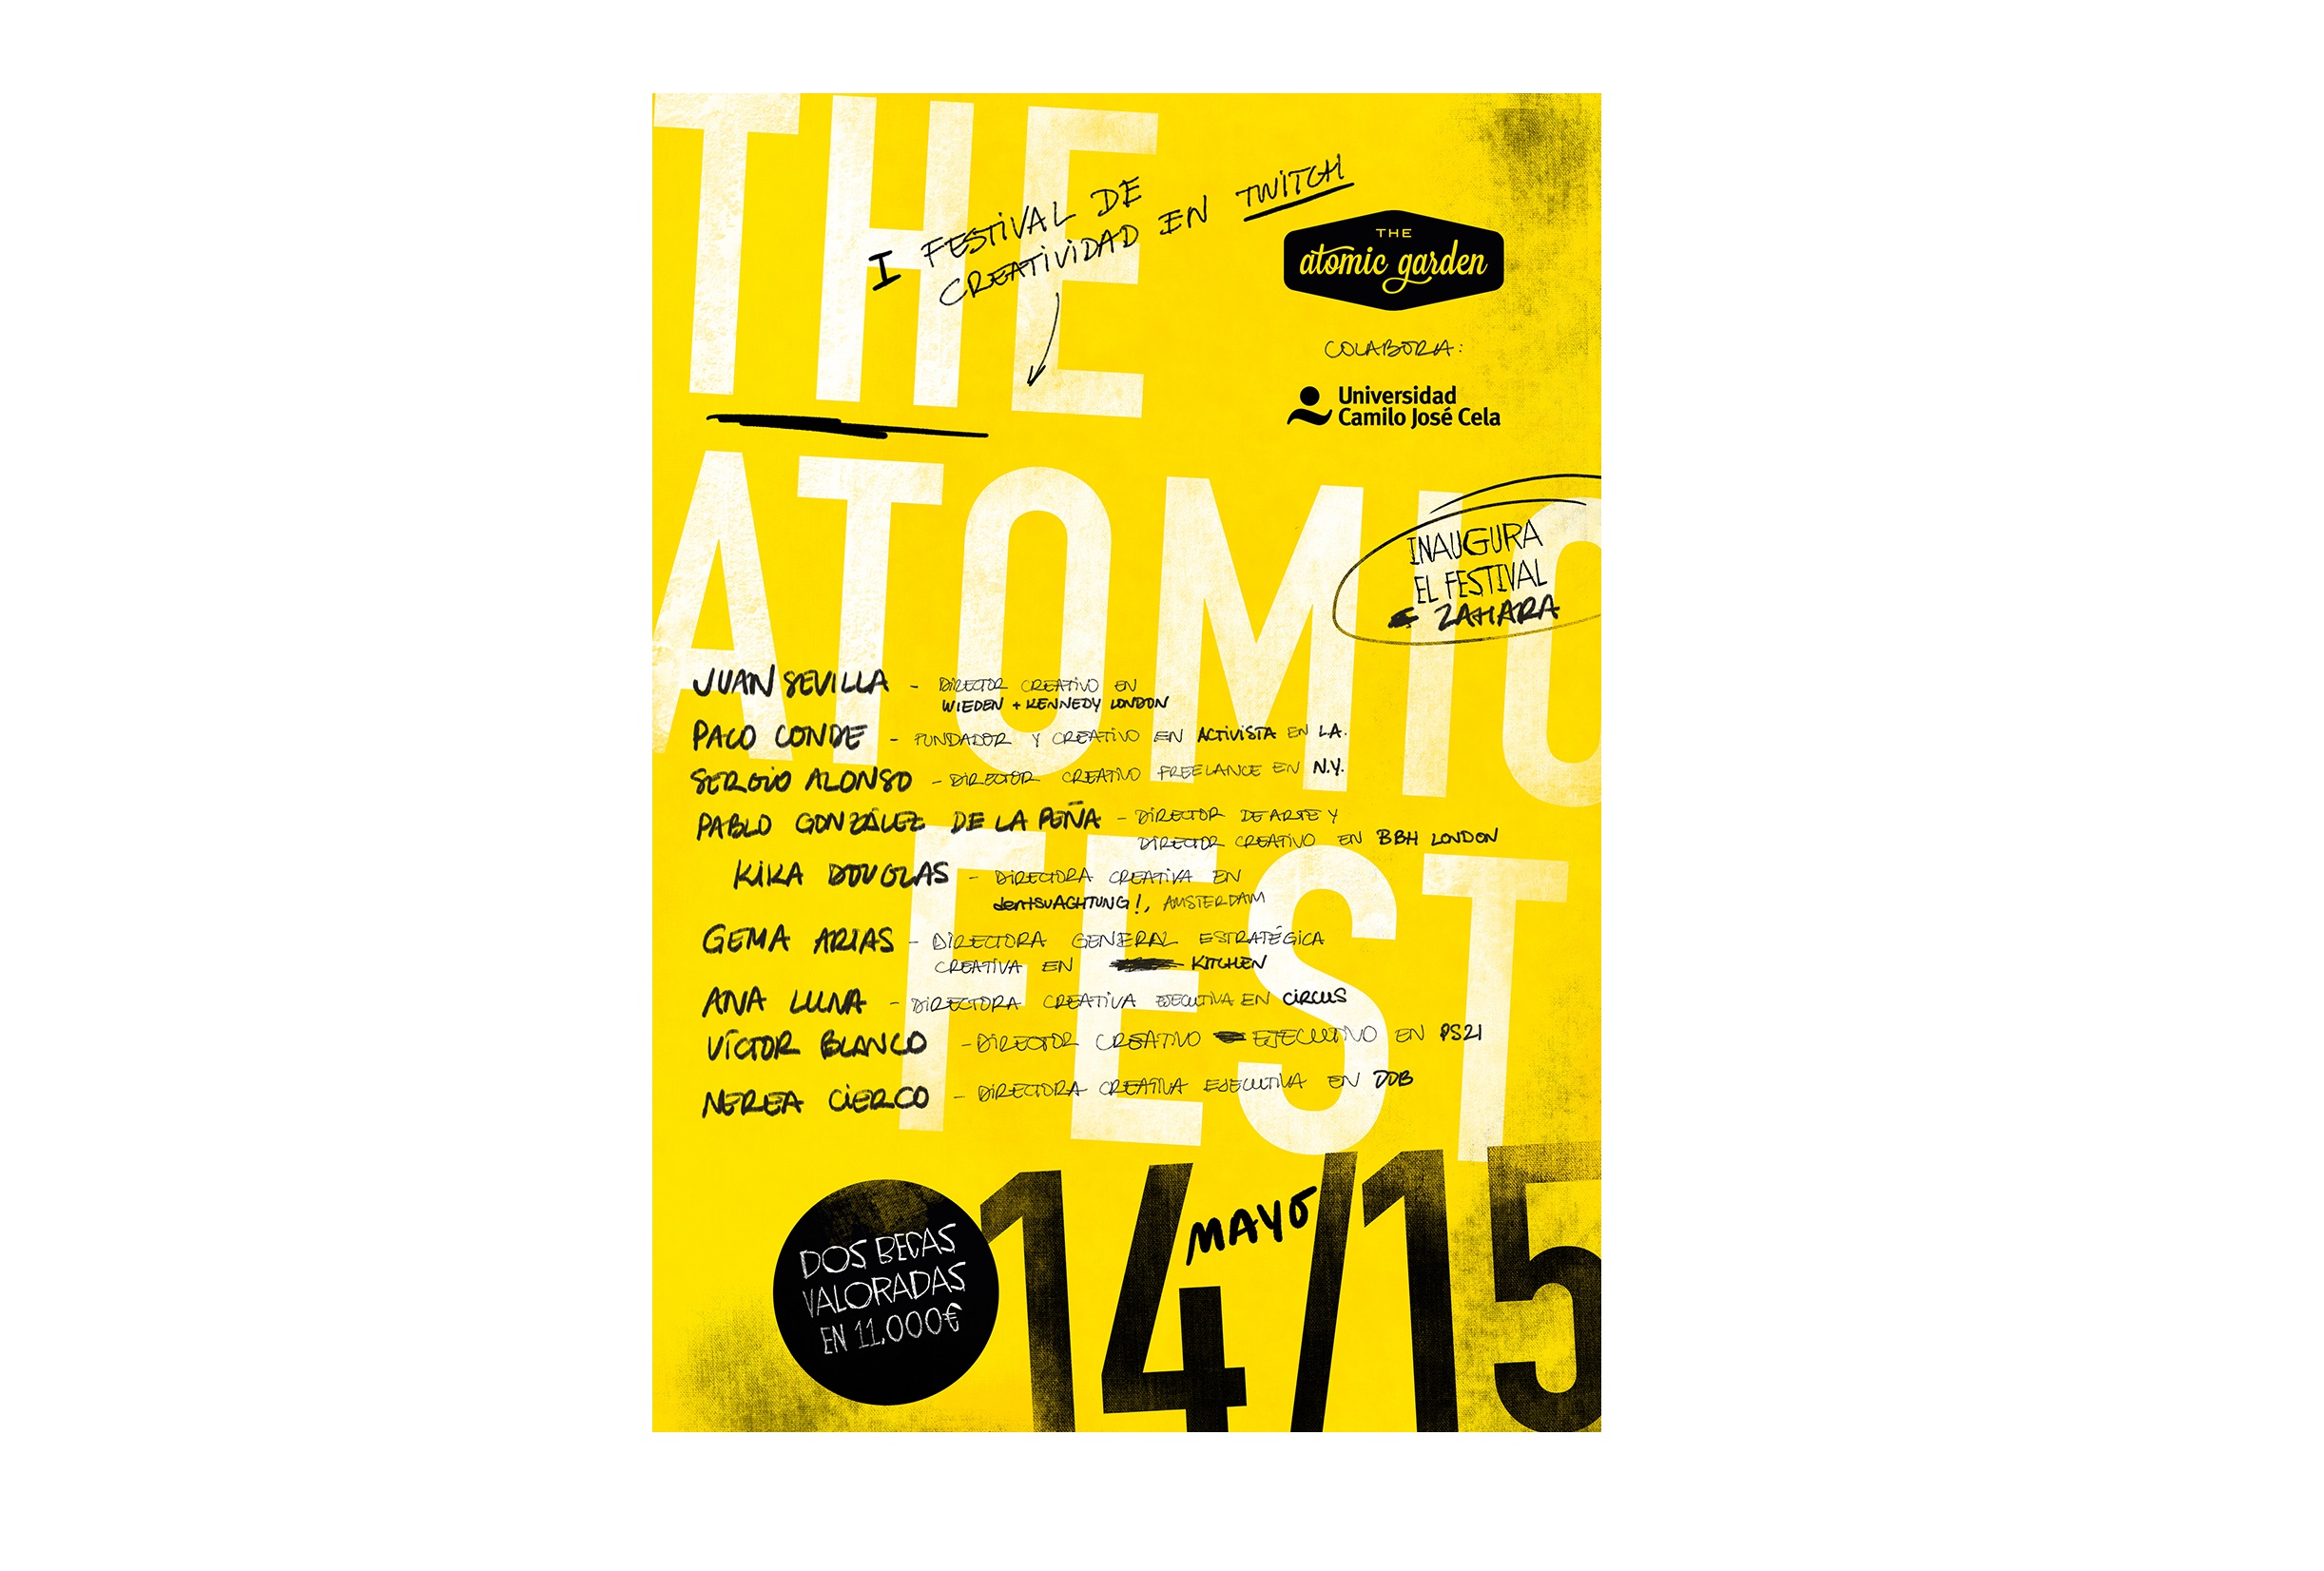 THE ATOMIC FEST , atomic garden, madrid, programapublicidad